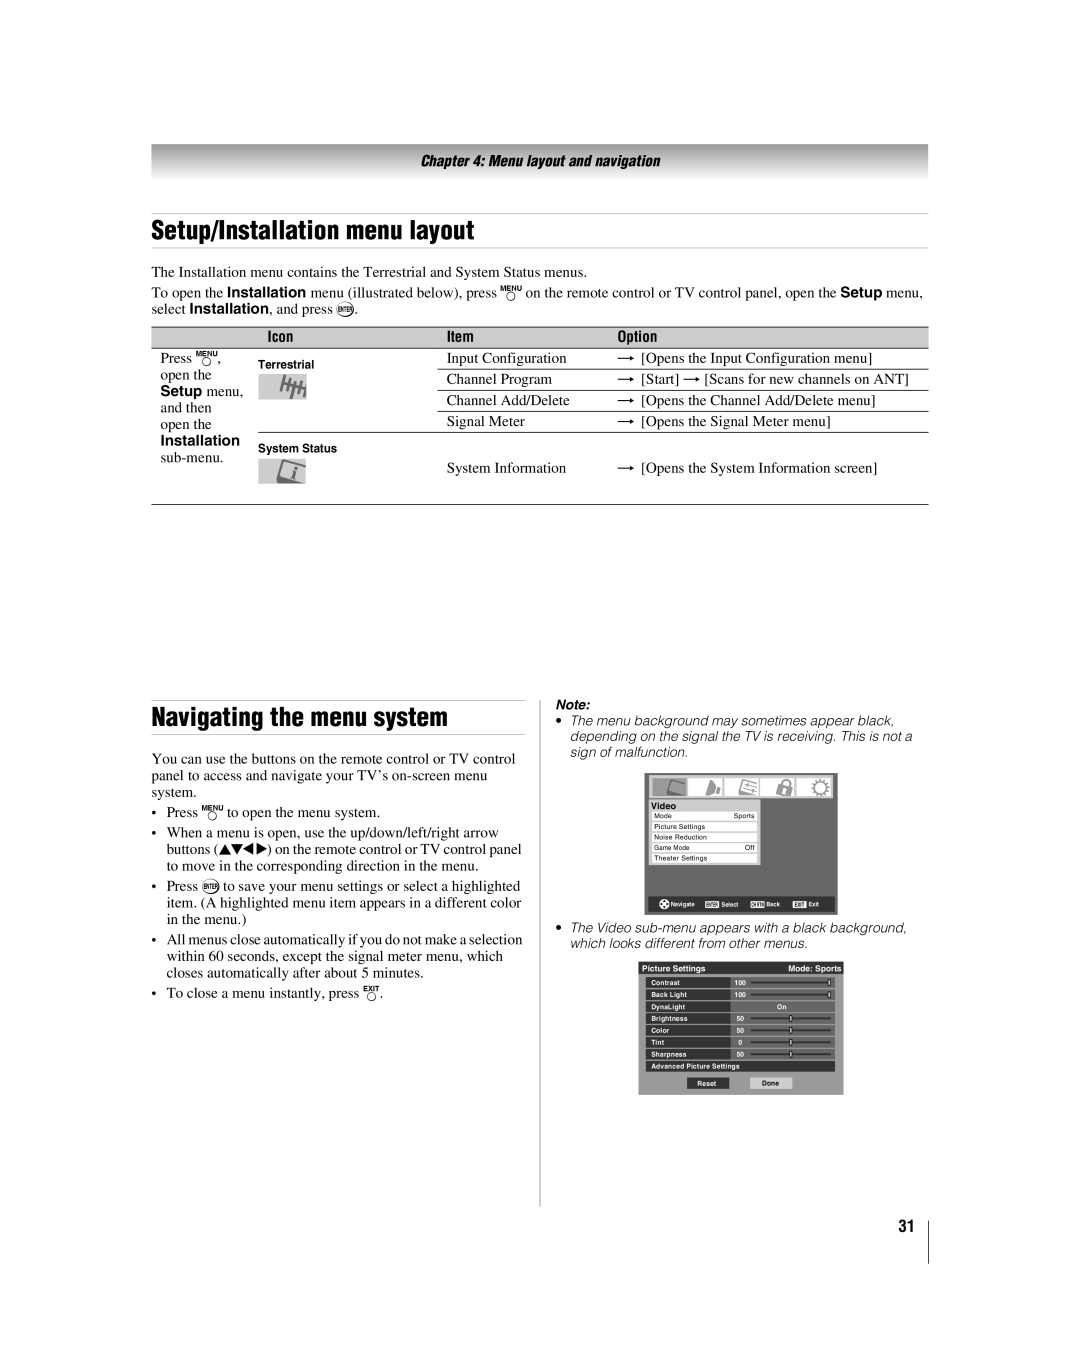 Toshiba 32LV67 Setup/Installation menu layout, Navigating the menu system, Menu layout and navigation, Setup menu, Icon 